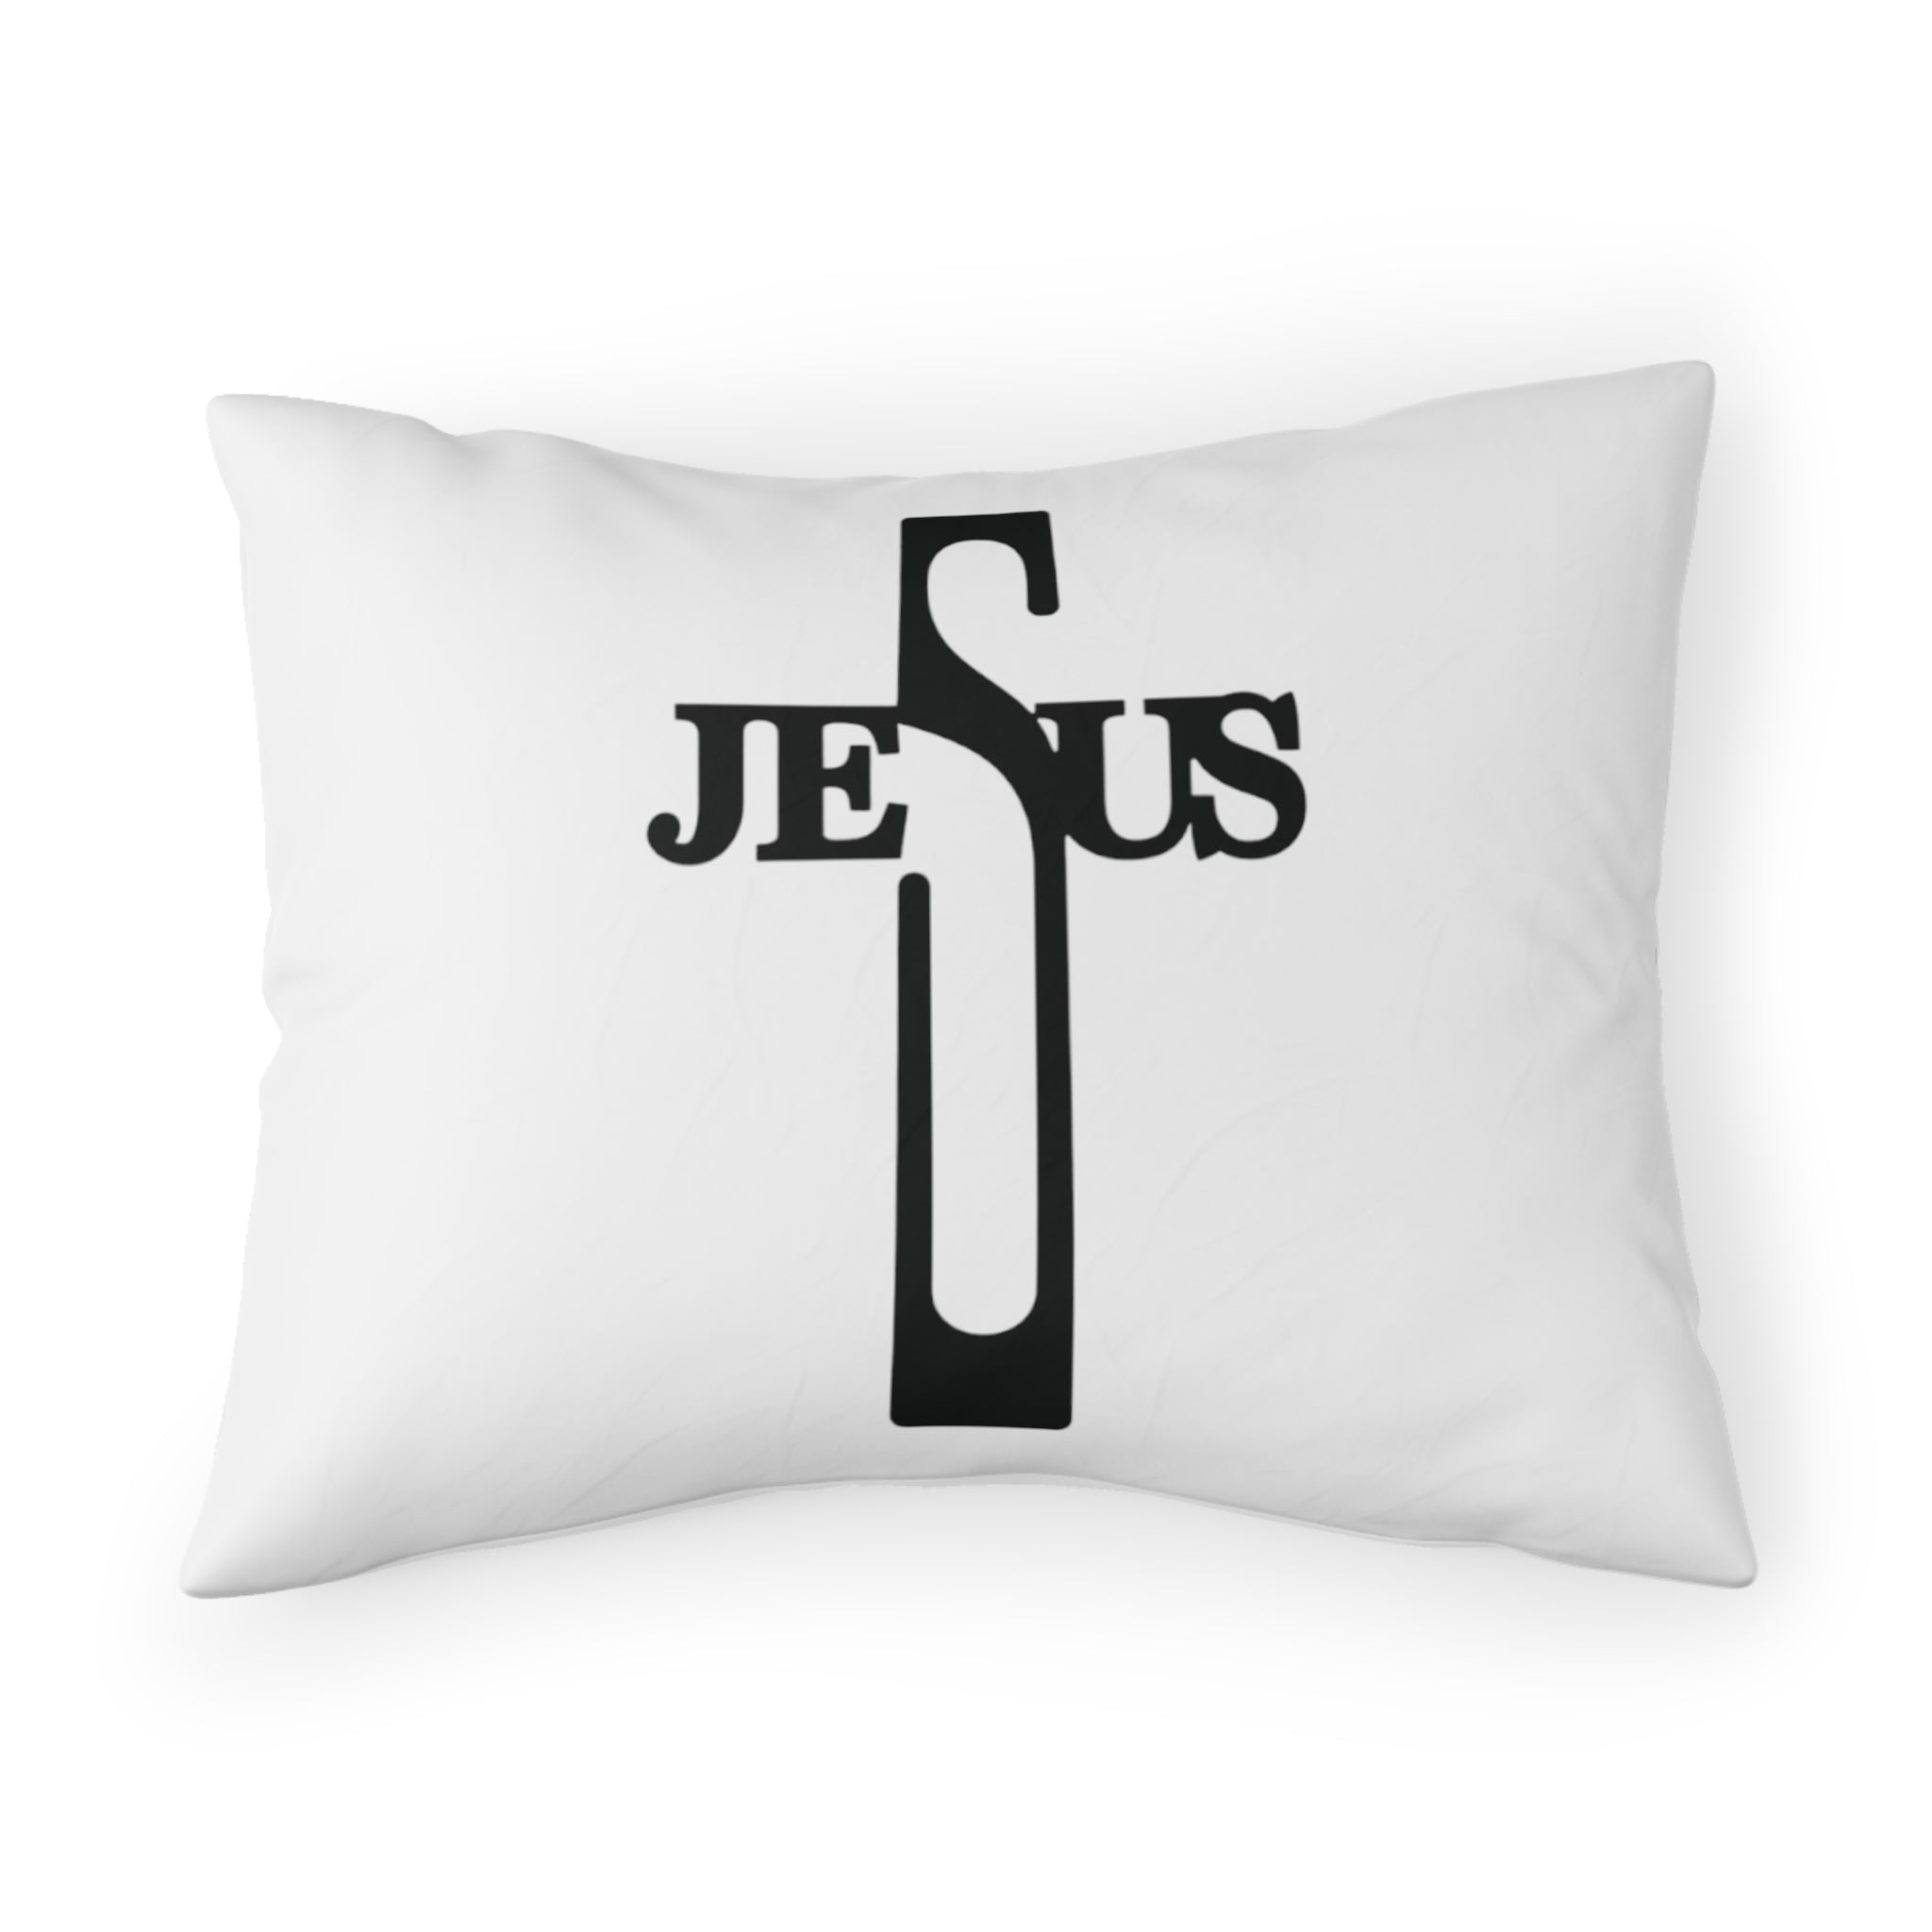 JESUS Pillow Sham